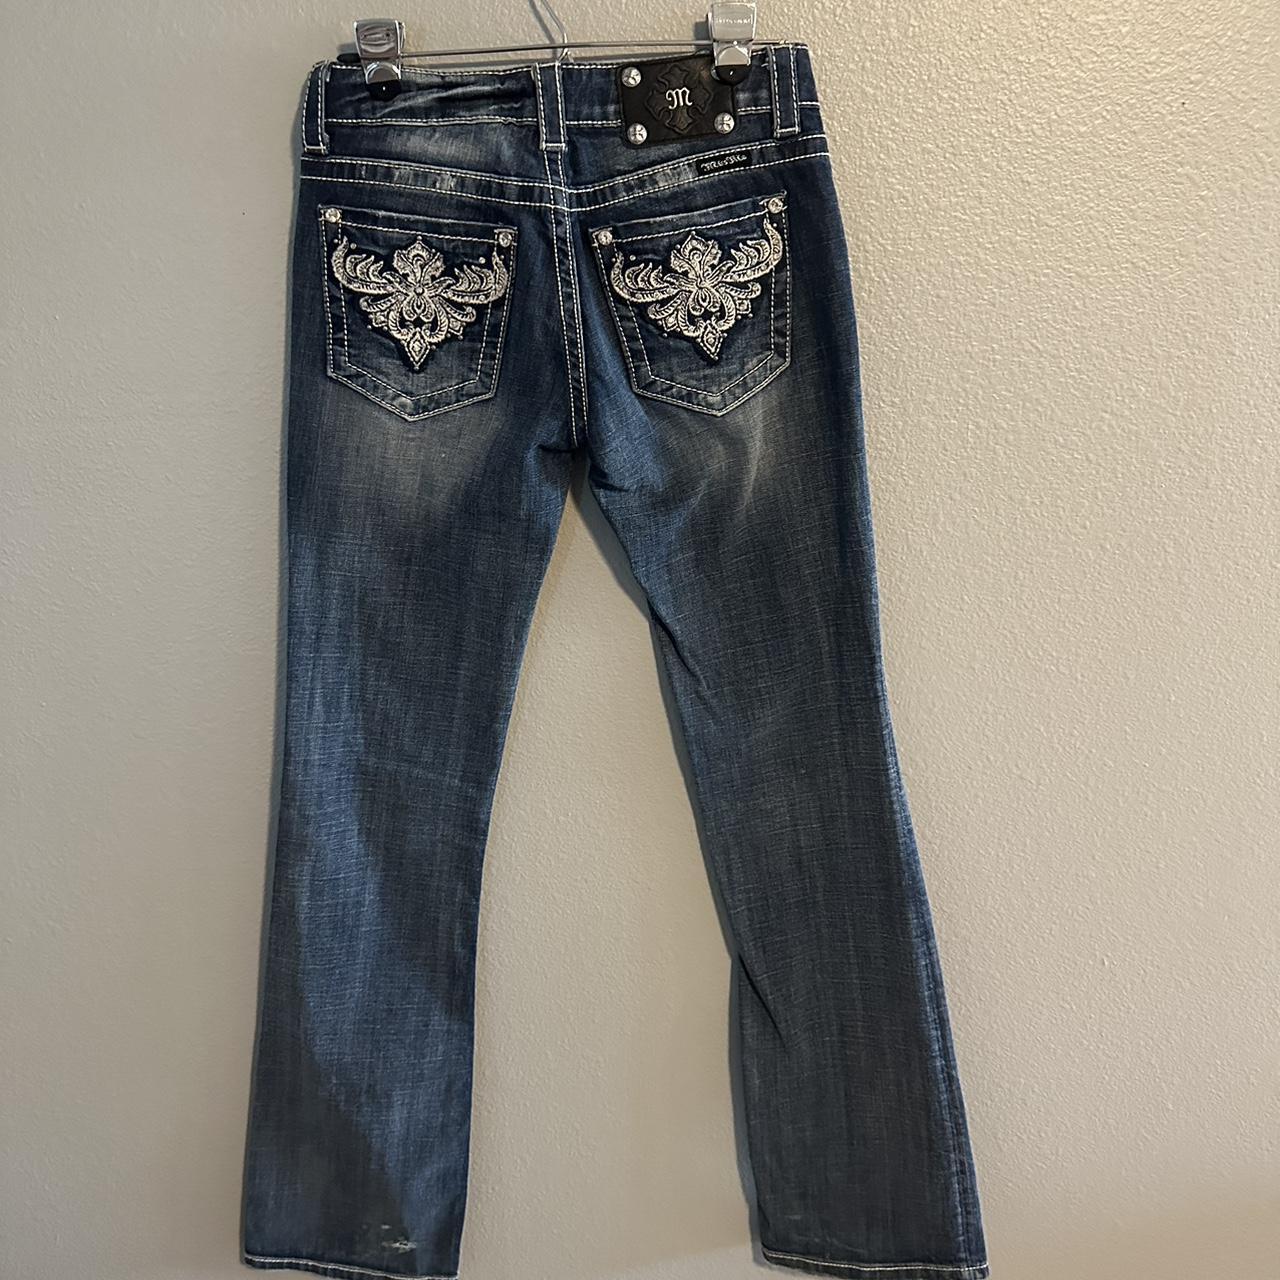 Vintage miss me low waisted flare jeans size 27... - Depop